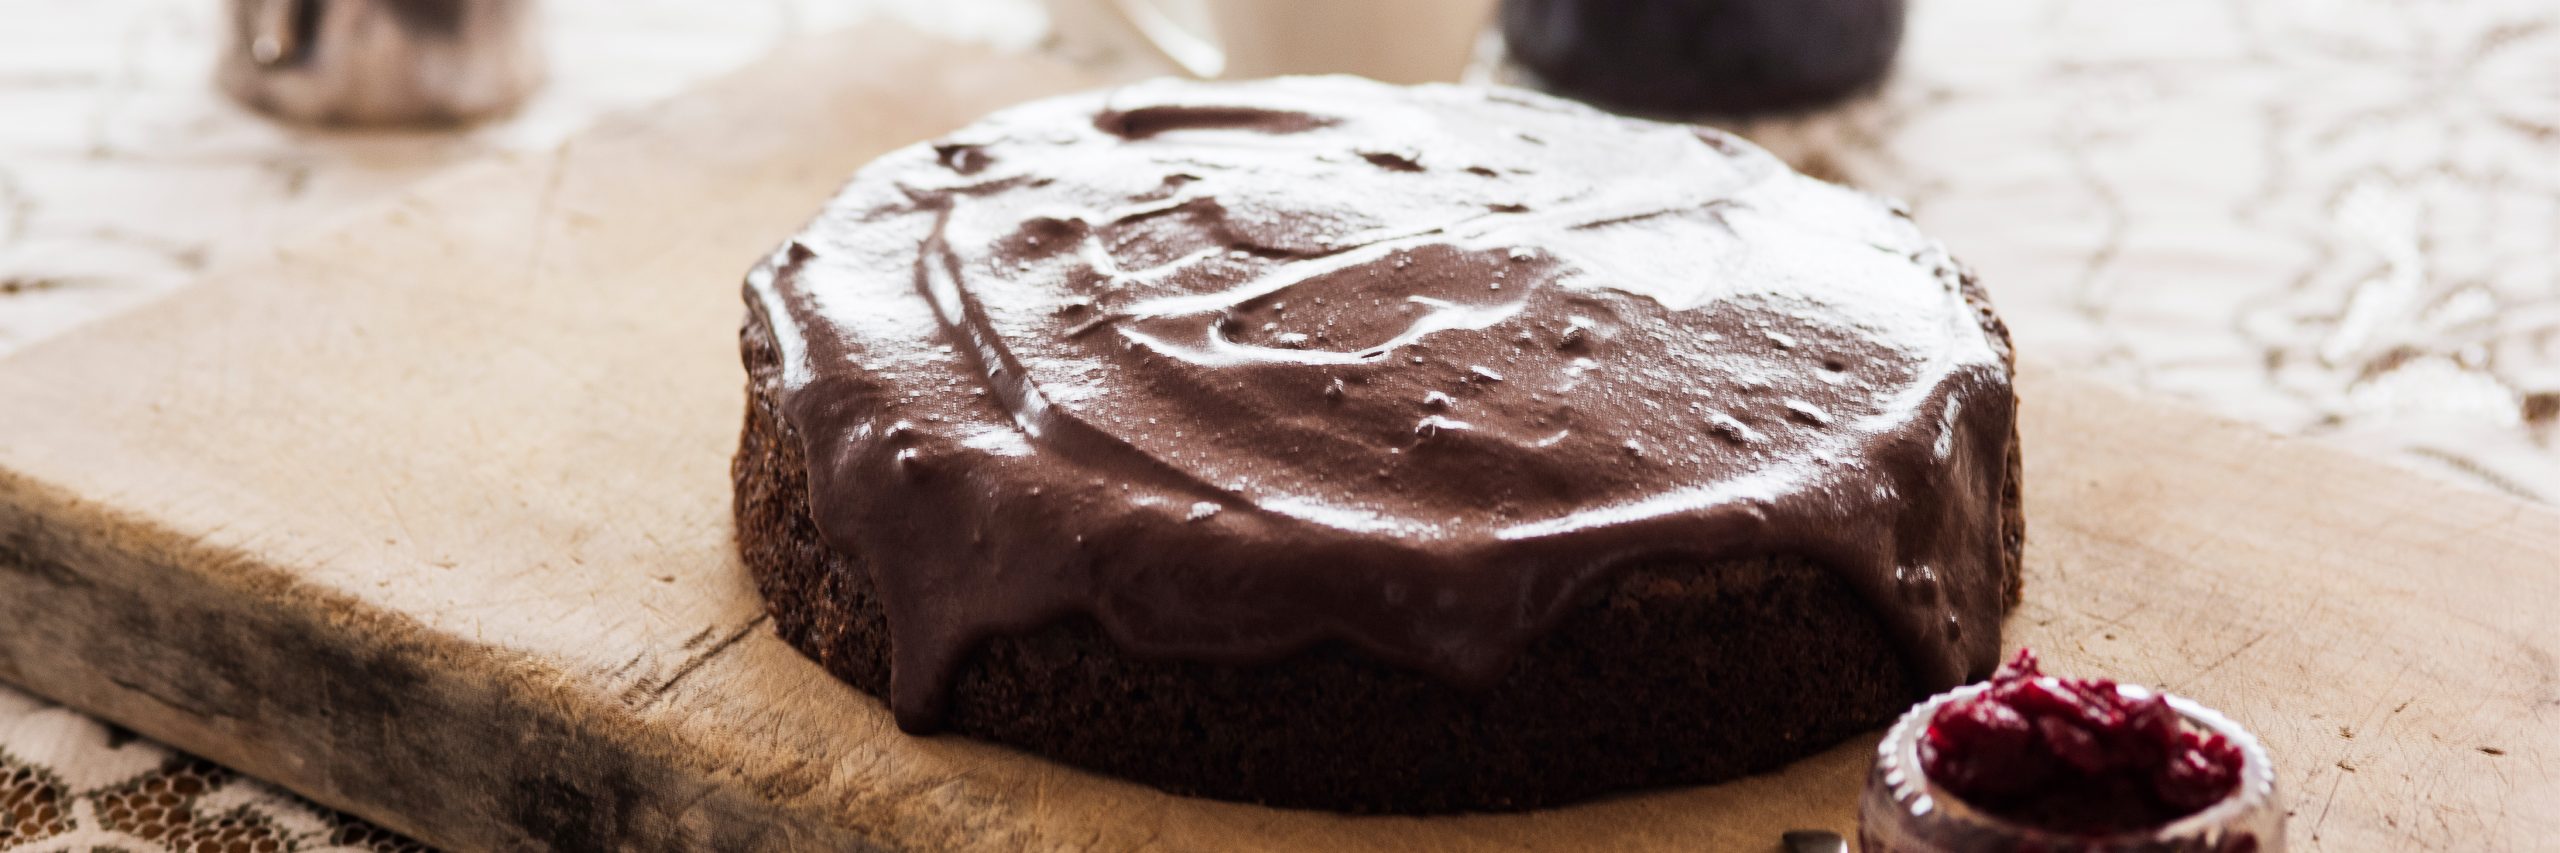 LeaderBrand Beetroot Chocolate Cake